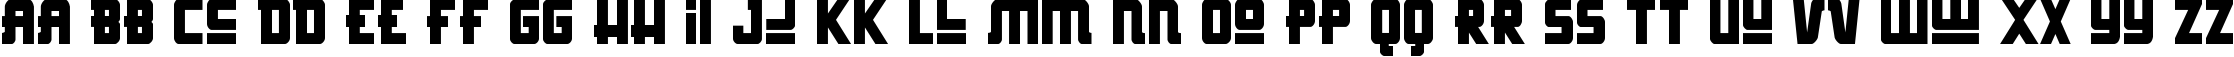 Пример написания английского алфавита шрифтом Hong Kong Hustle Condensed